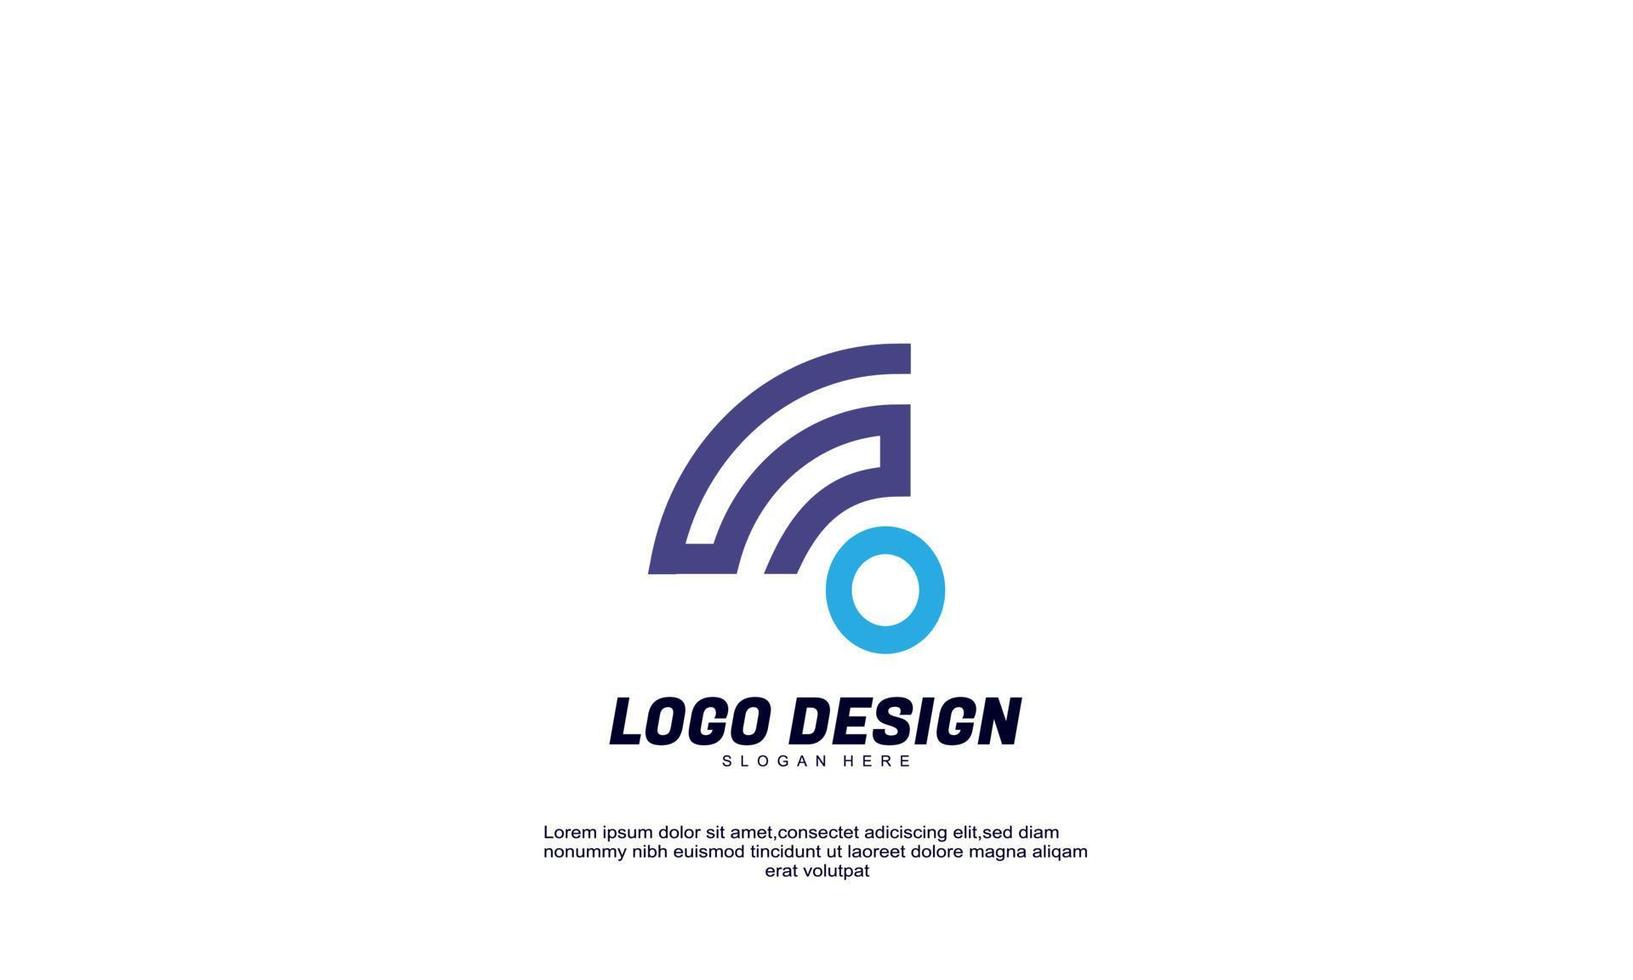 sinal criativo abstrato de vetor de estoque e logotipo de ideia de círculo para modelo de design de empresa ou negócios